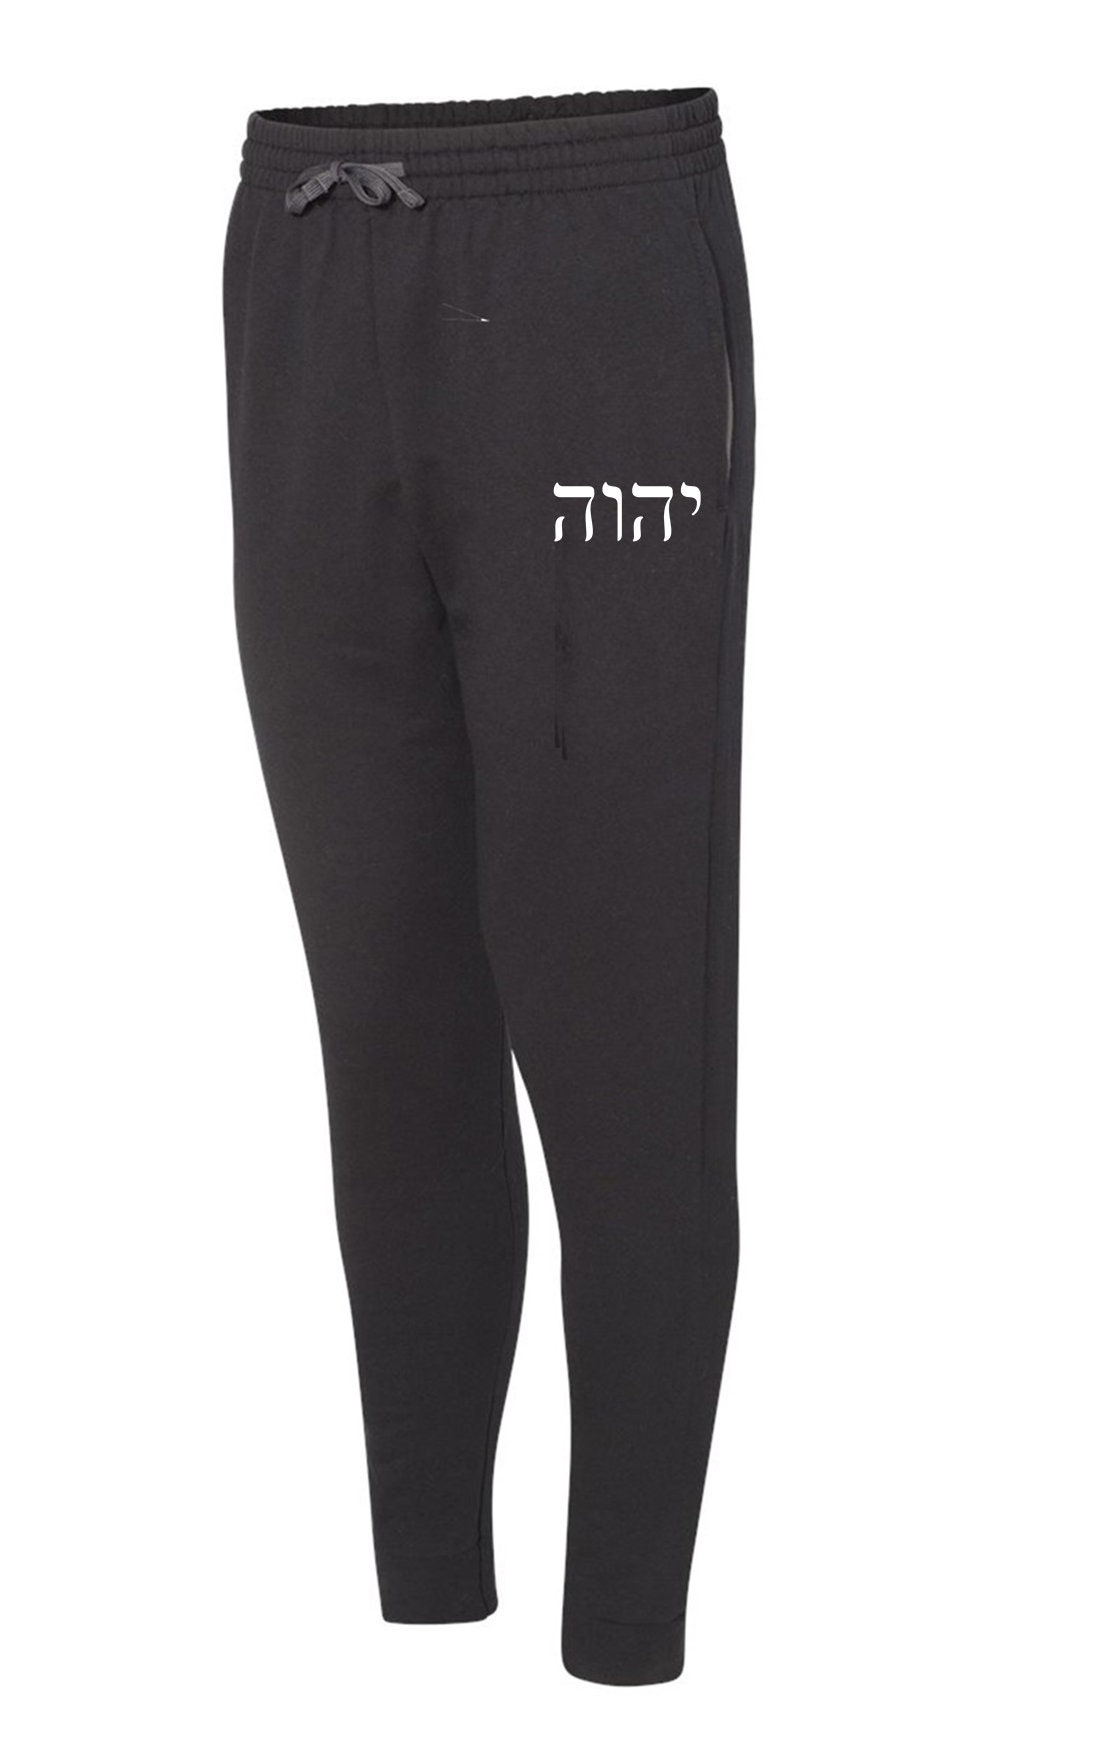 Yahweh God YHWH Hebrew Writing Jogger Sweatpants Pants 